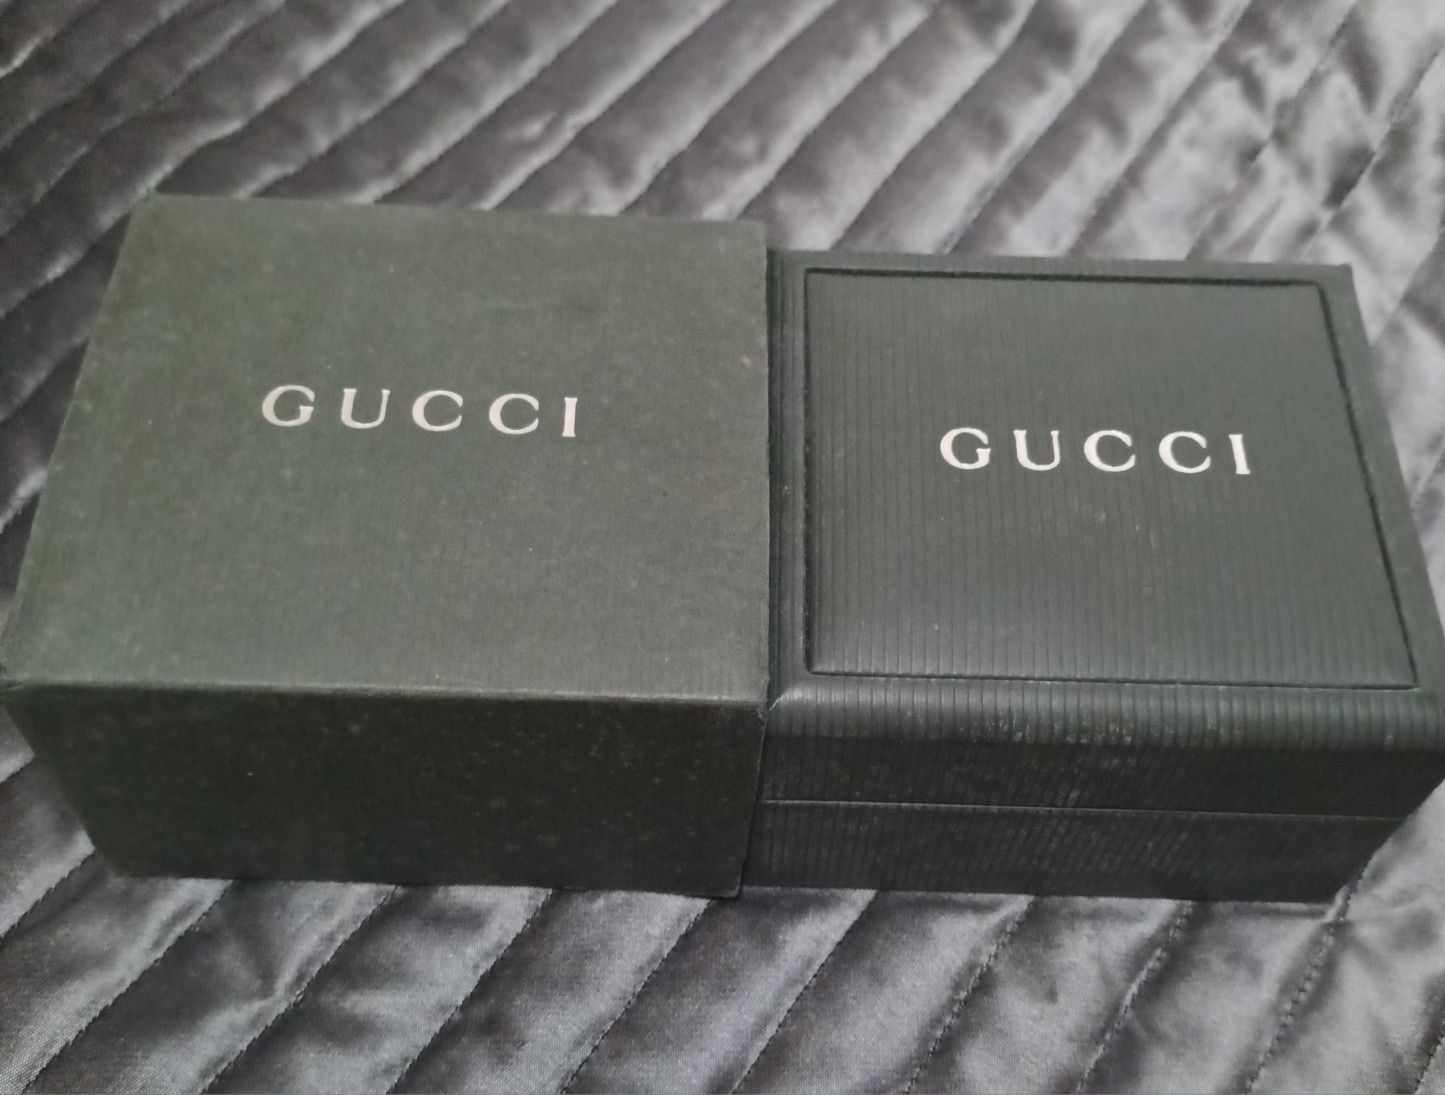 Relógio Gucci original